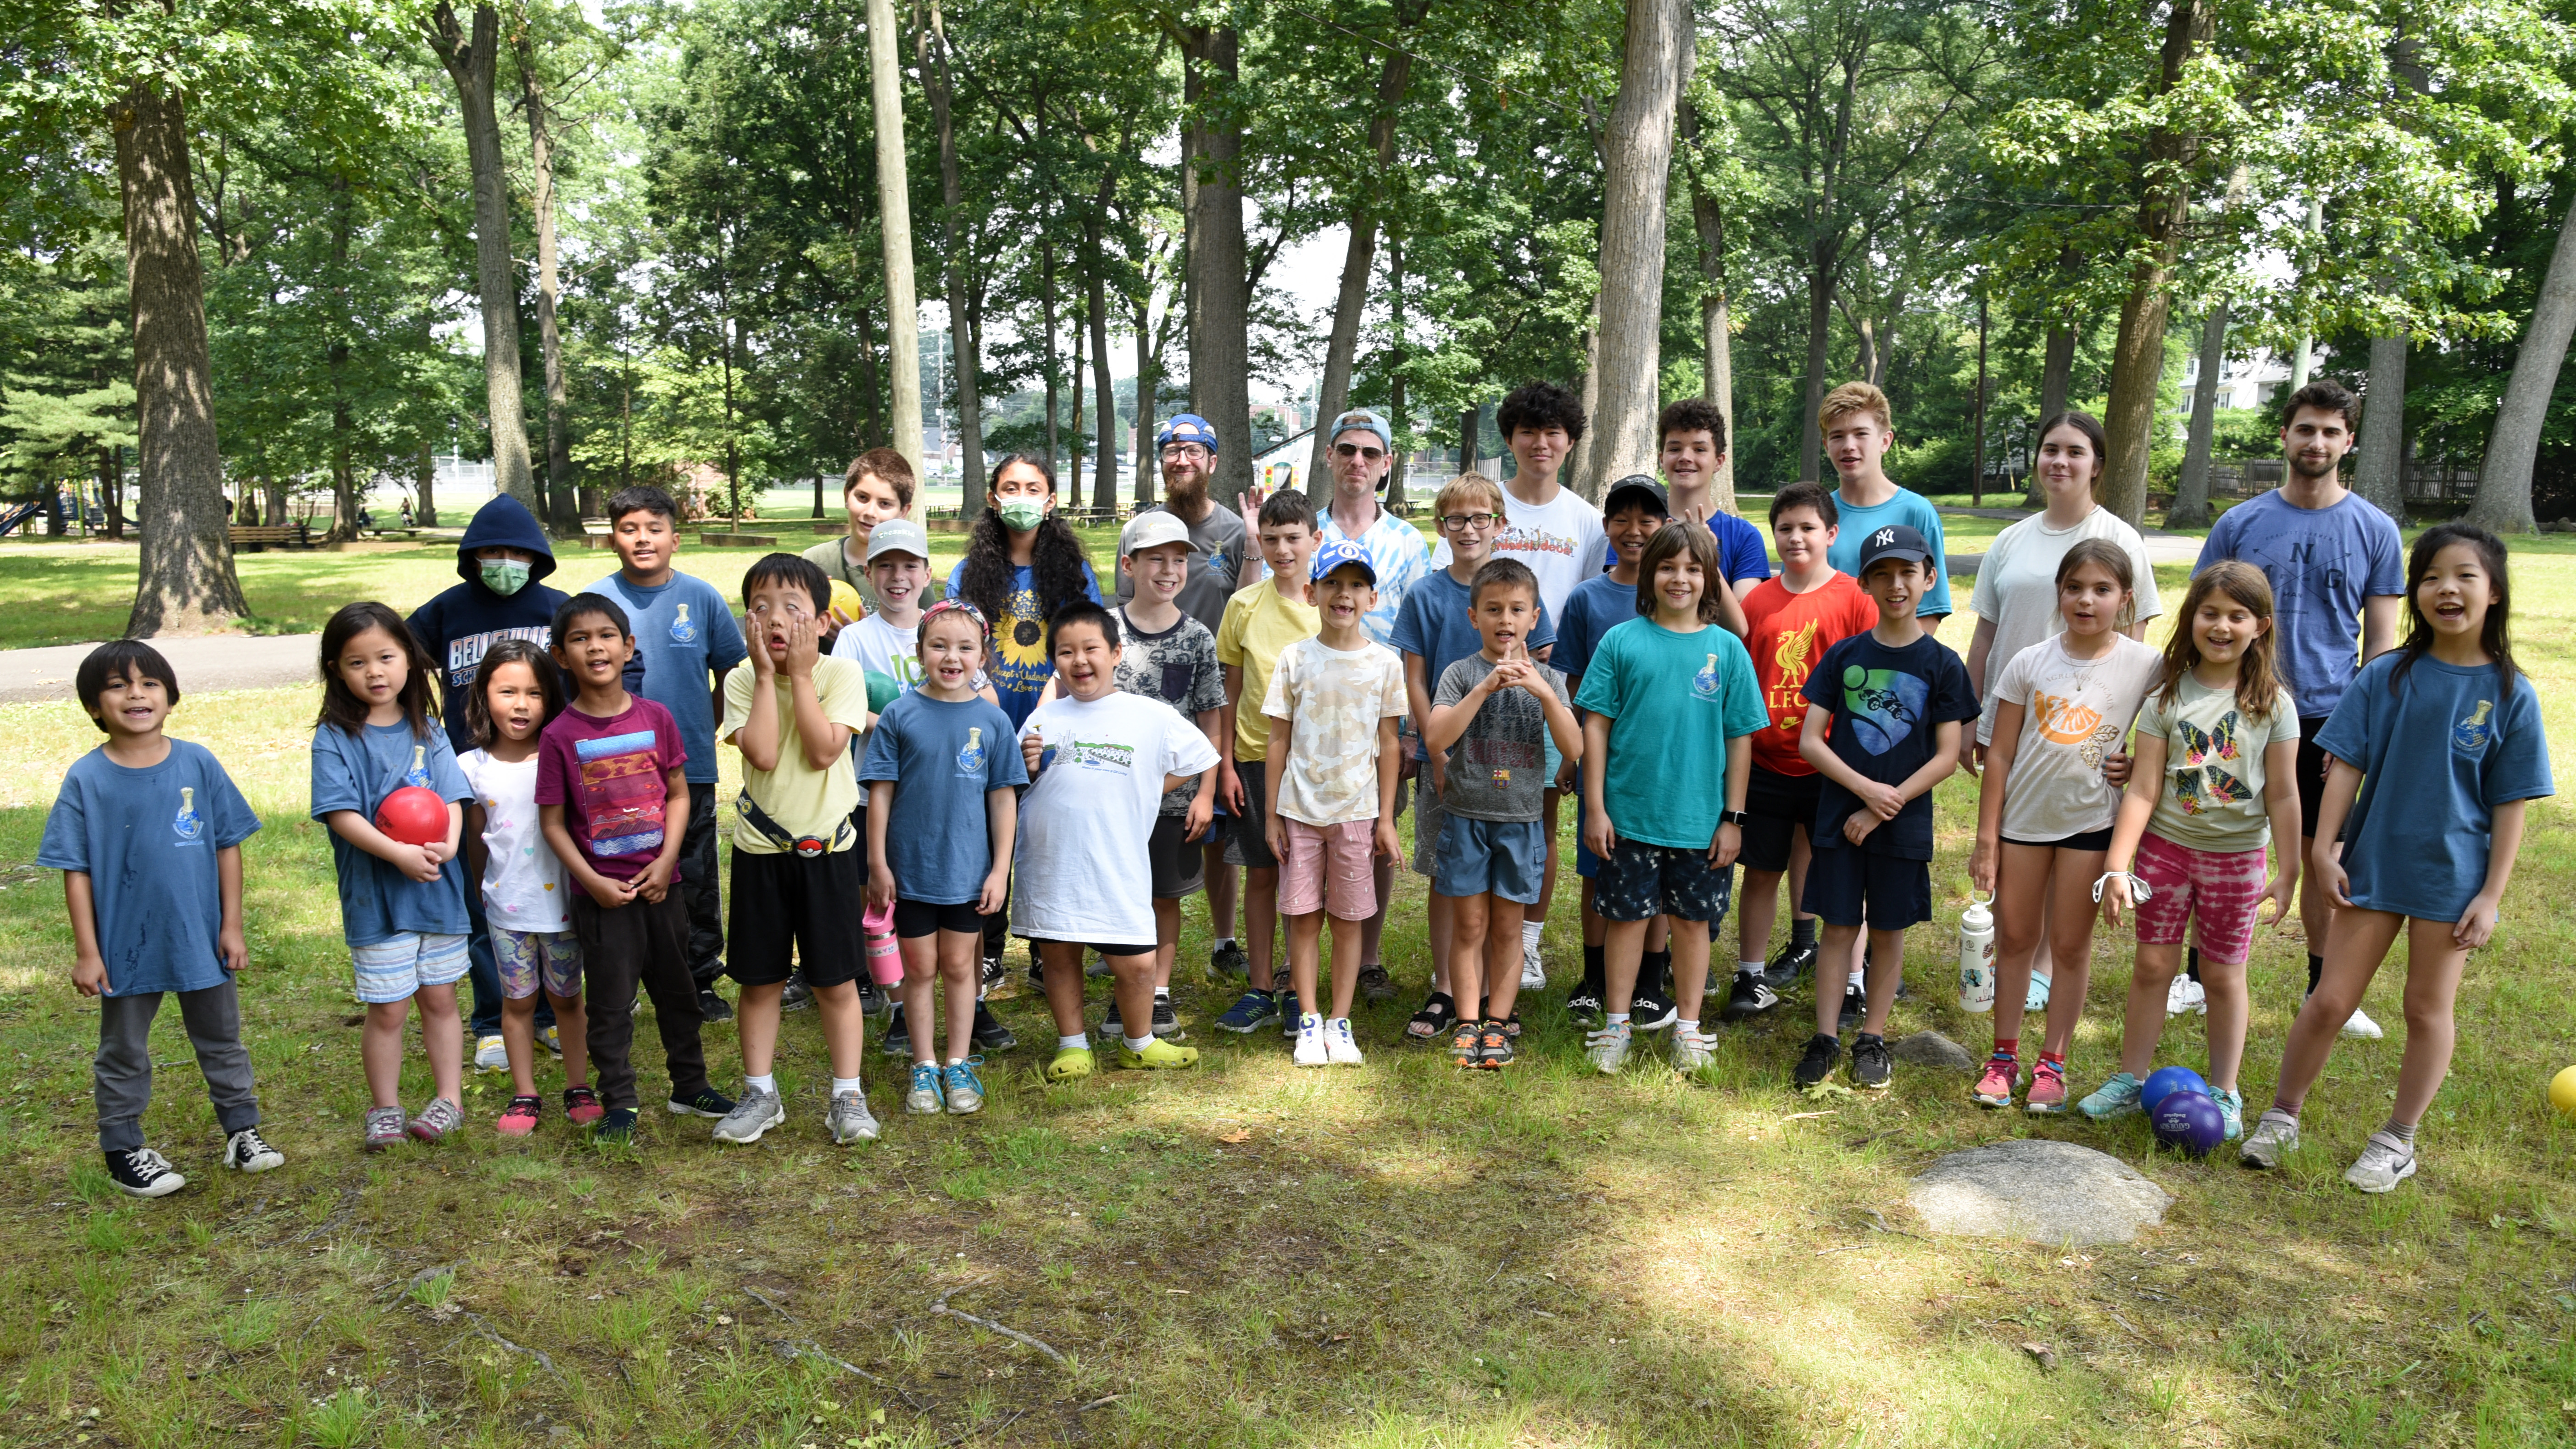 Glen Rock Summer Camp Week 2 Report